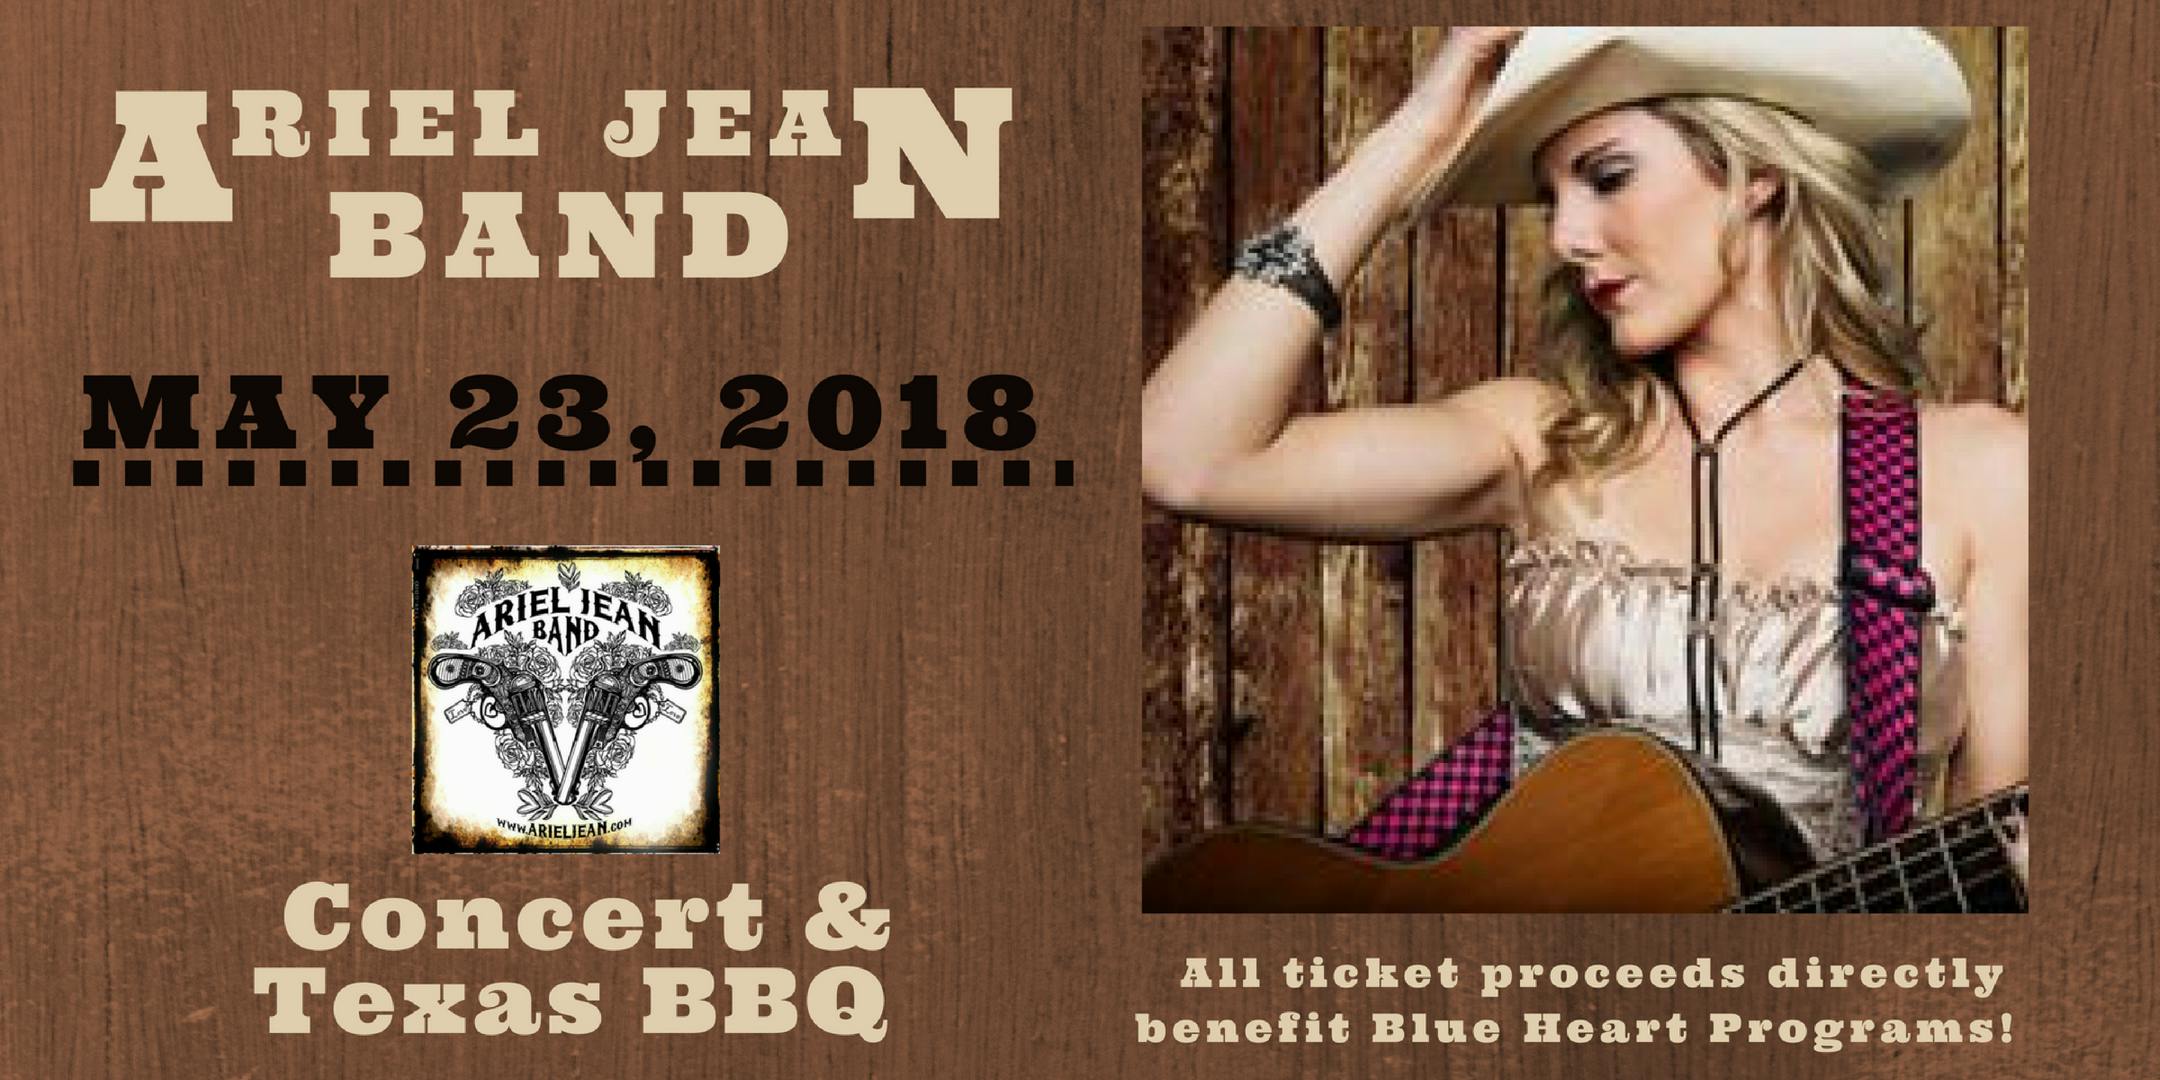 Ariel Jean Band Concert & Texas BBQ 